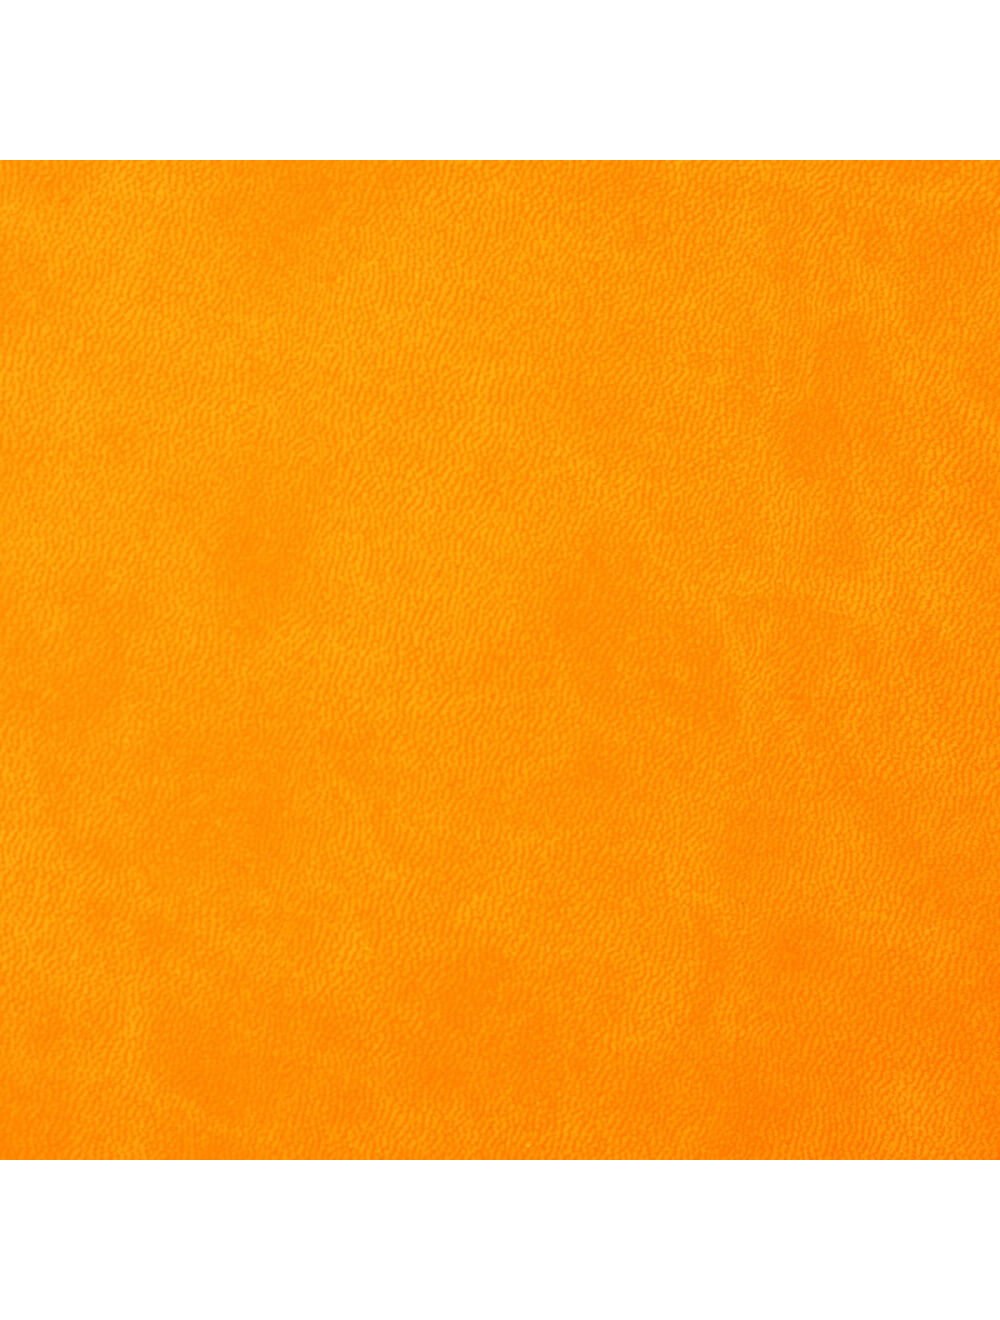 Rome Light Orange Material Swatch (4740)